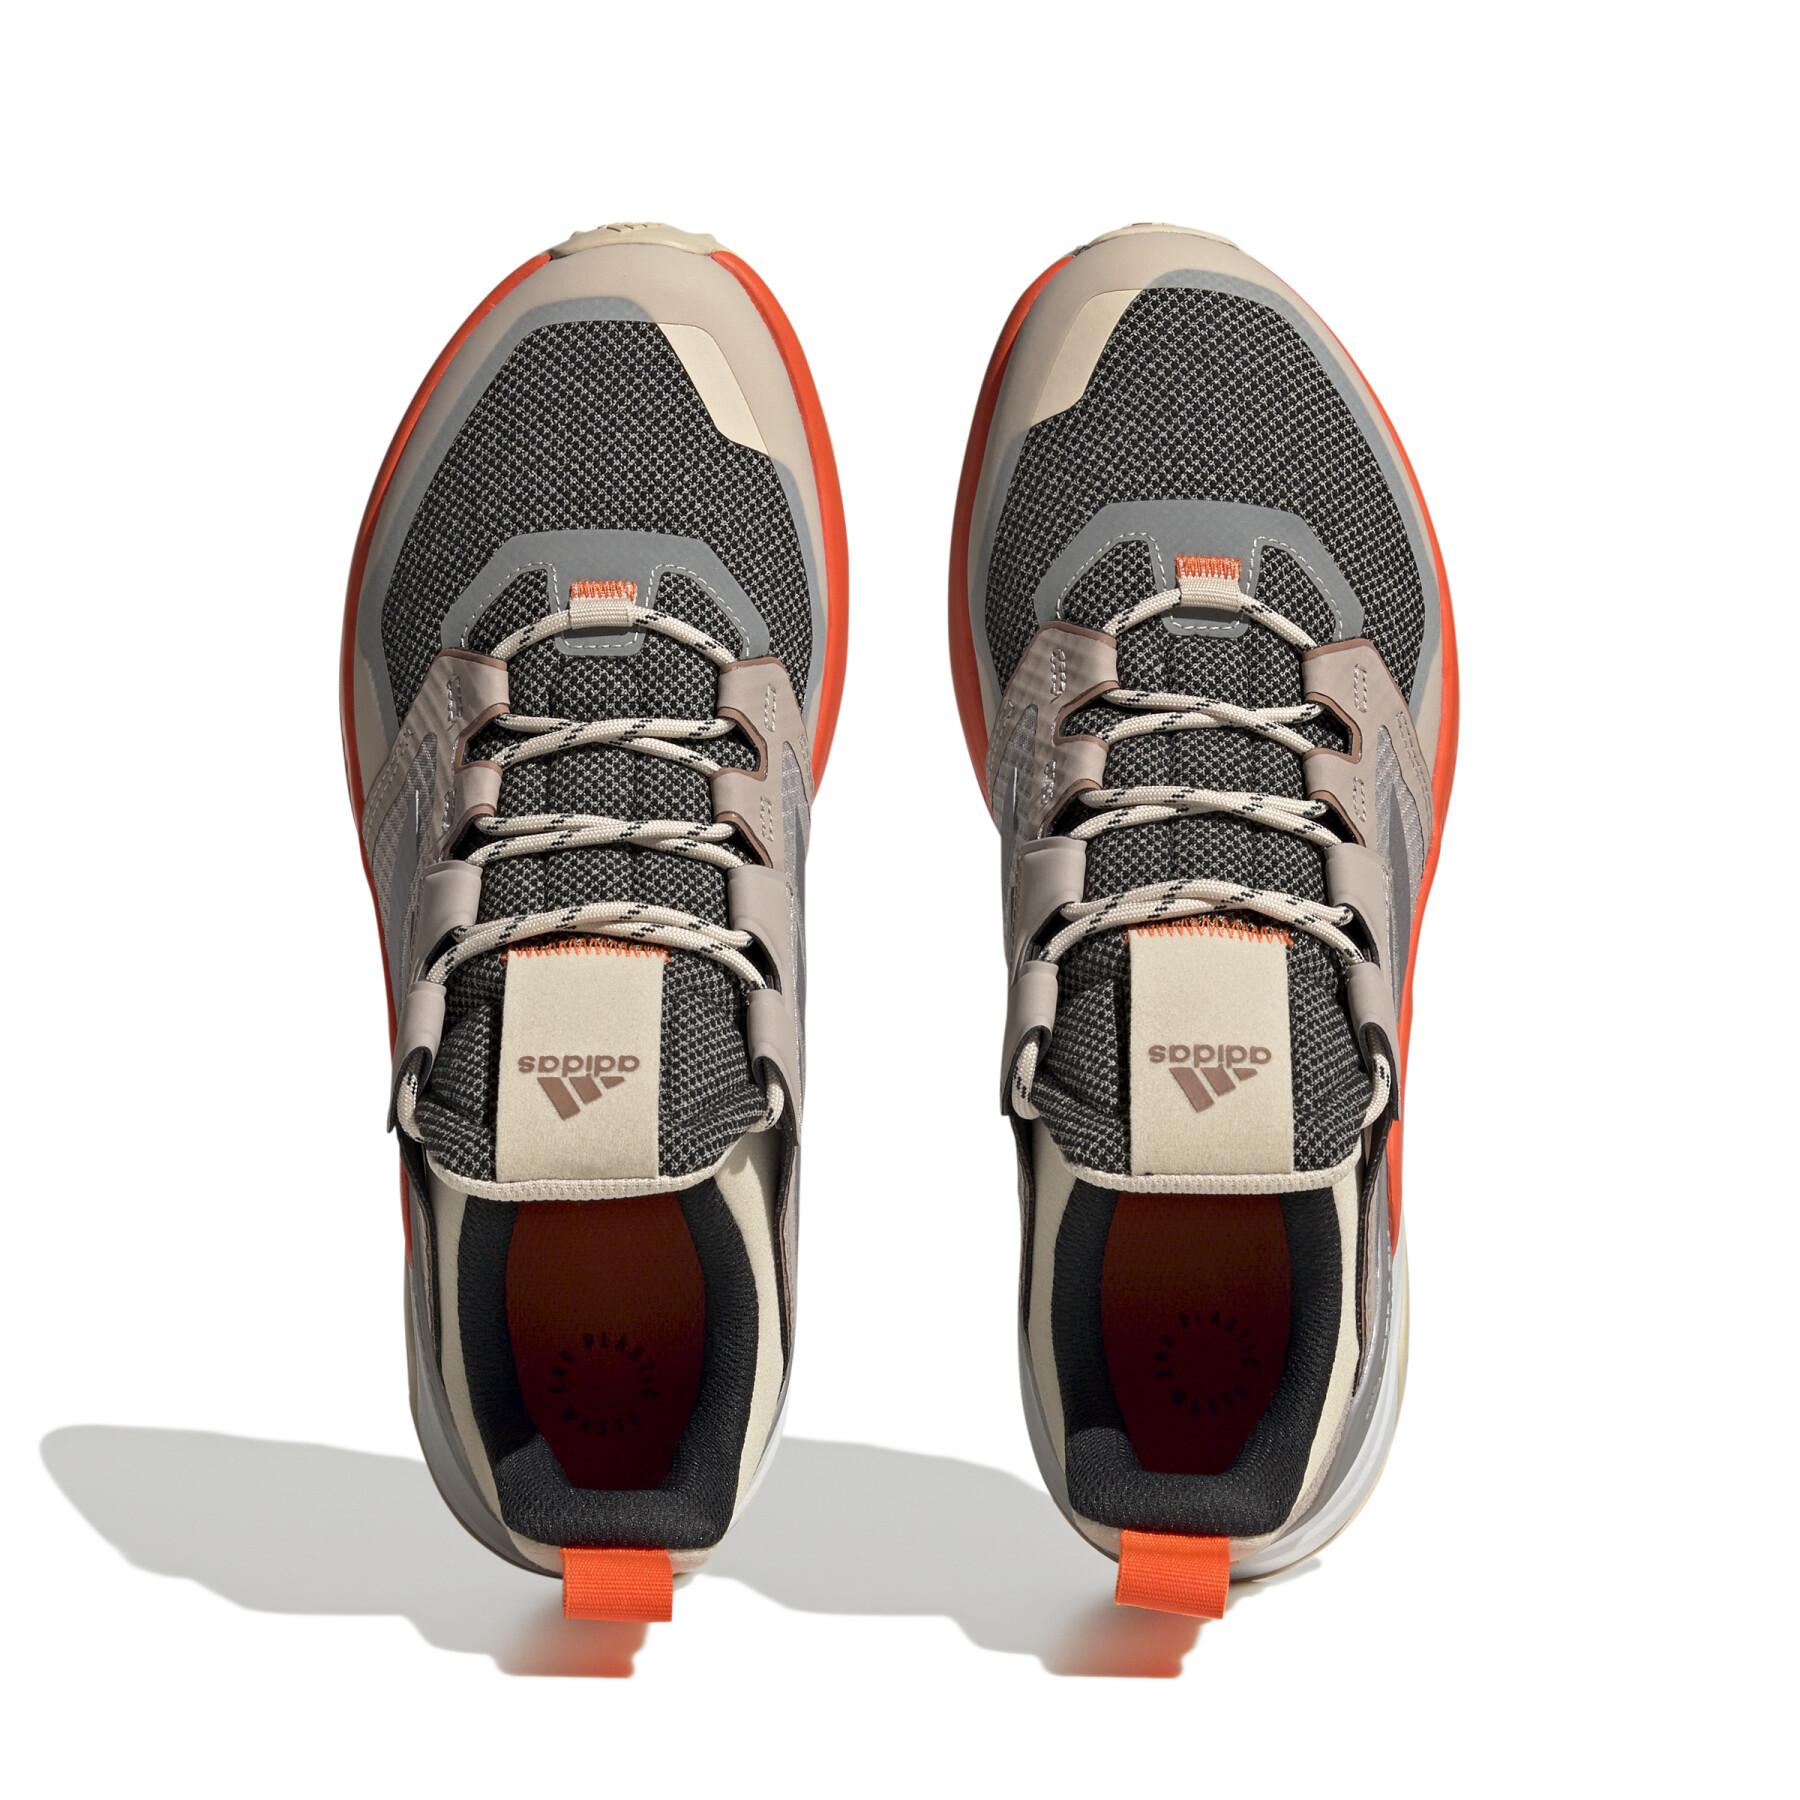 Chaussures de randonnée adidas Terrex Trailmaker